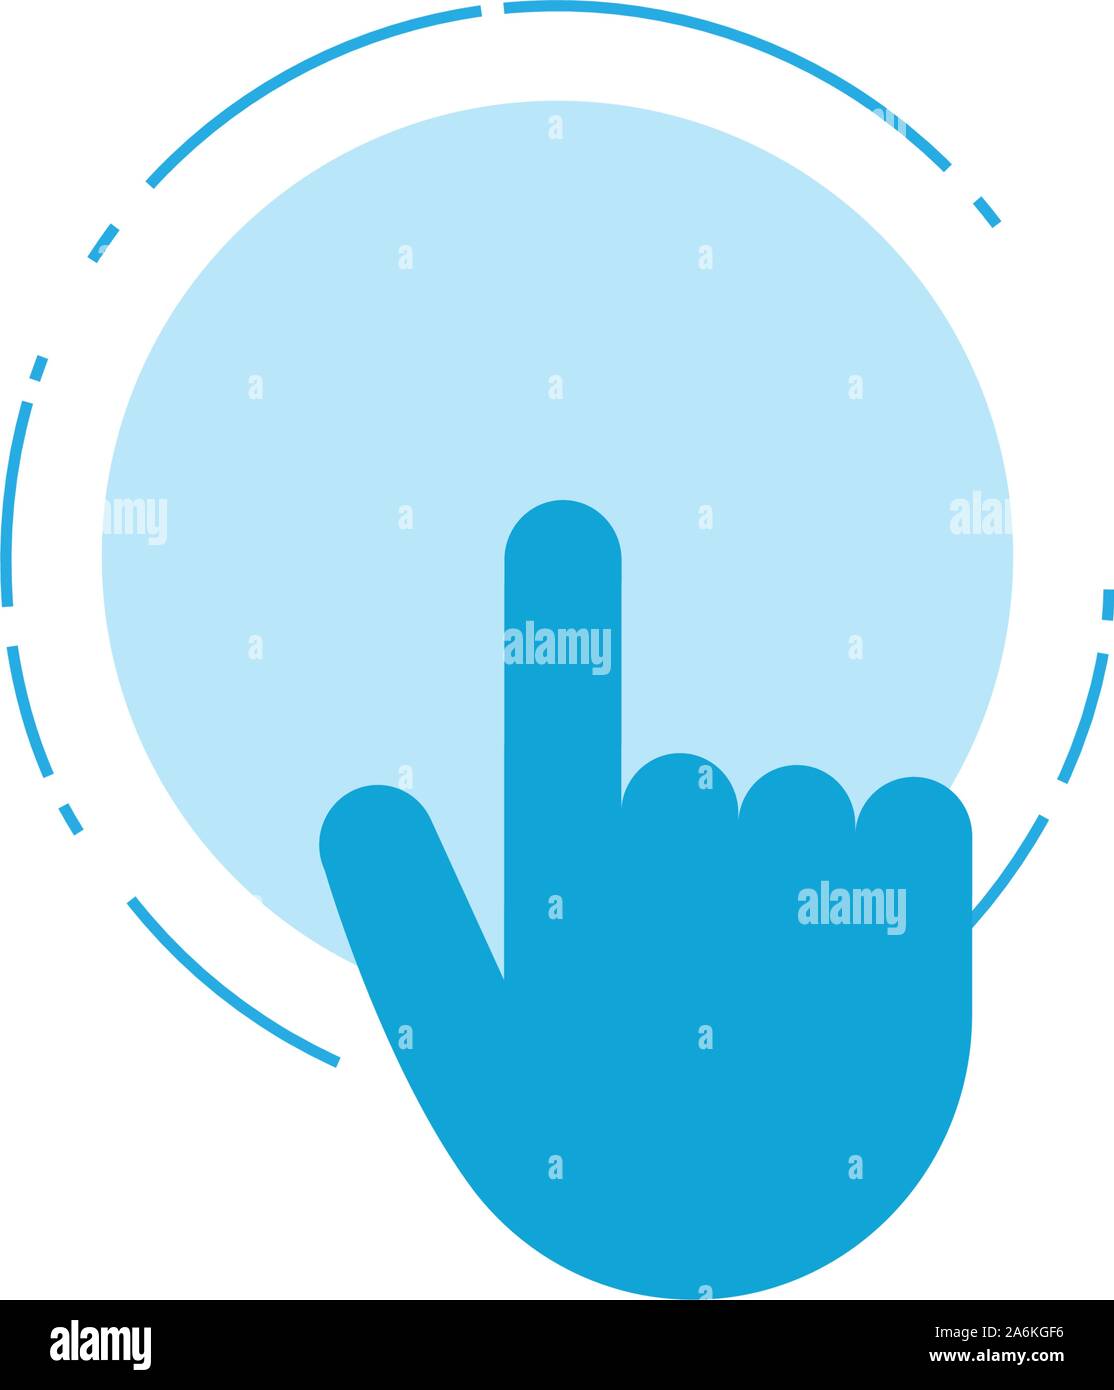 Hand cursor click png icon. Stock Illustration